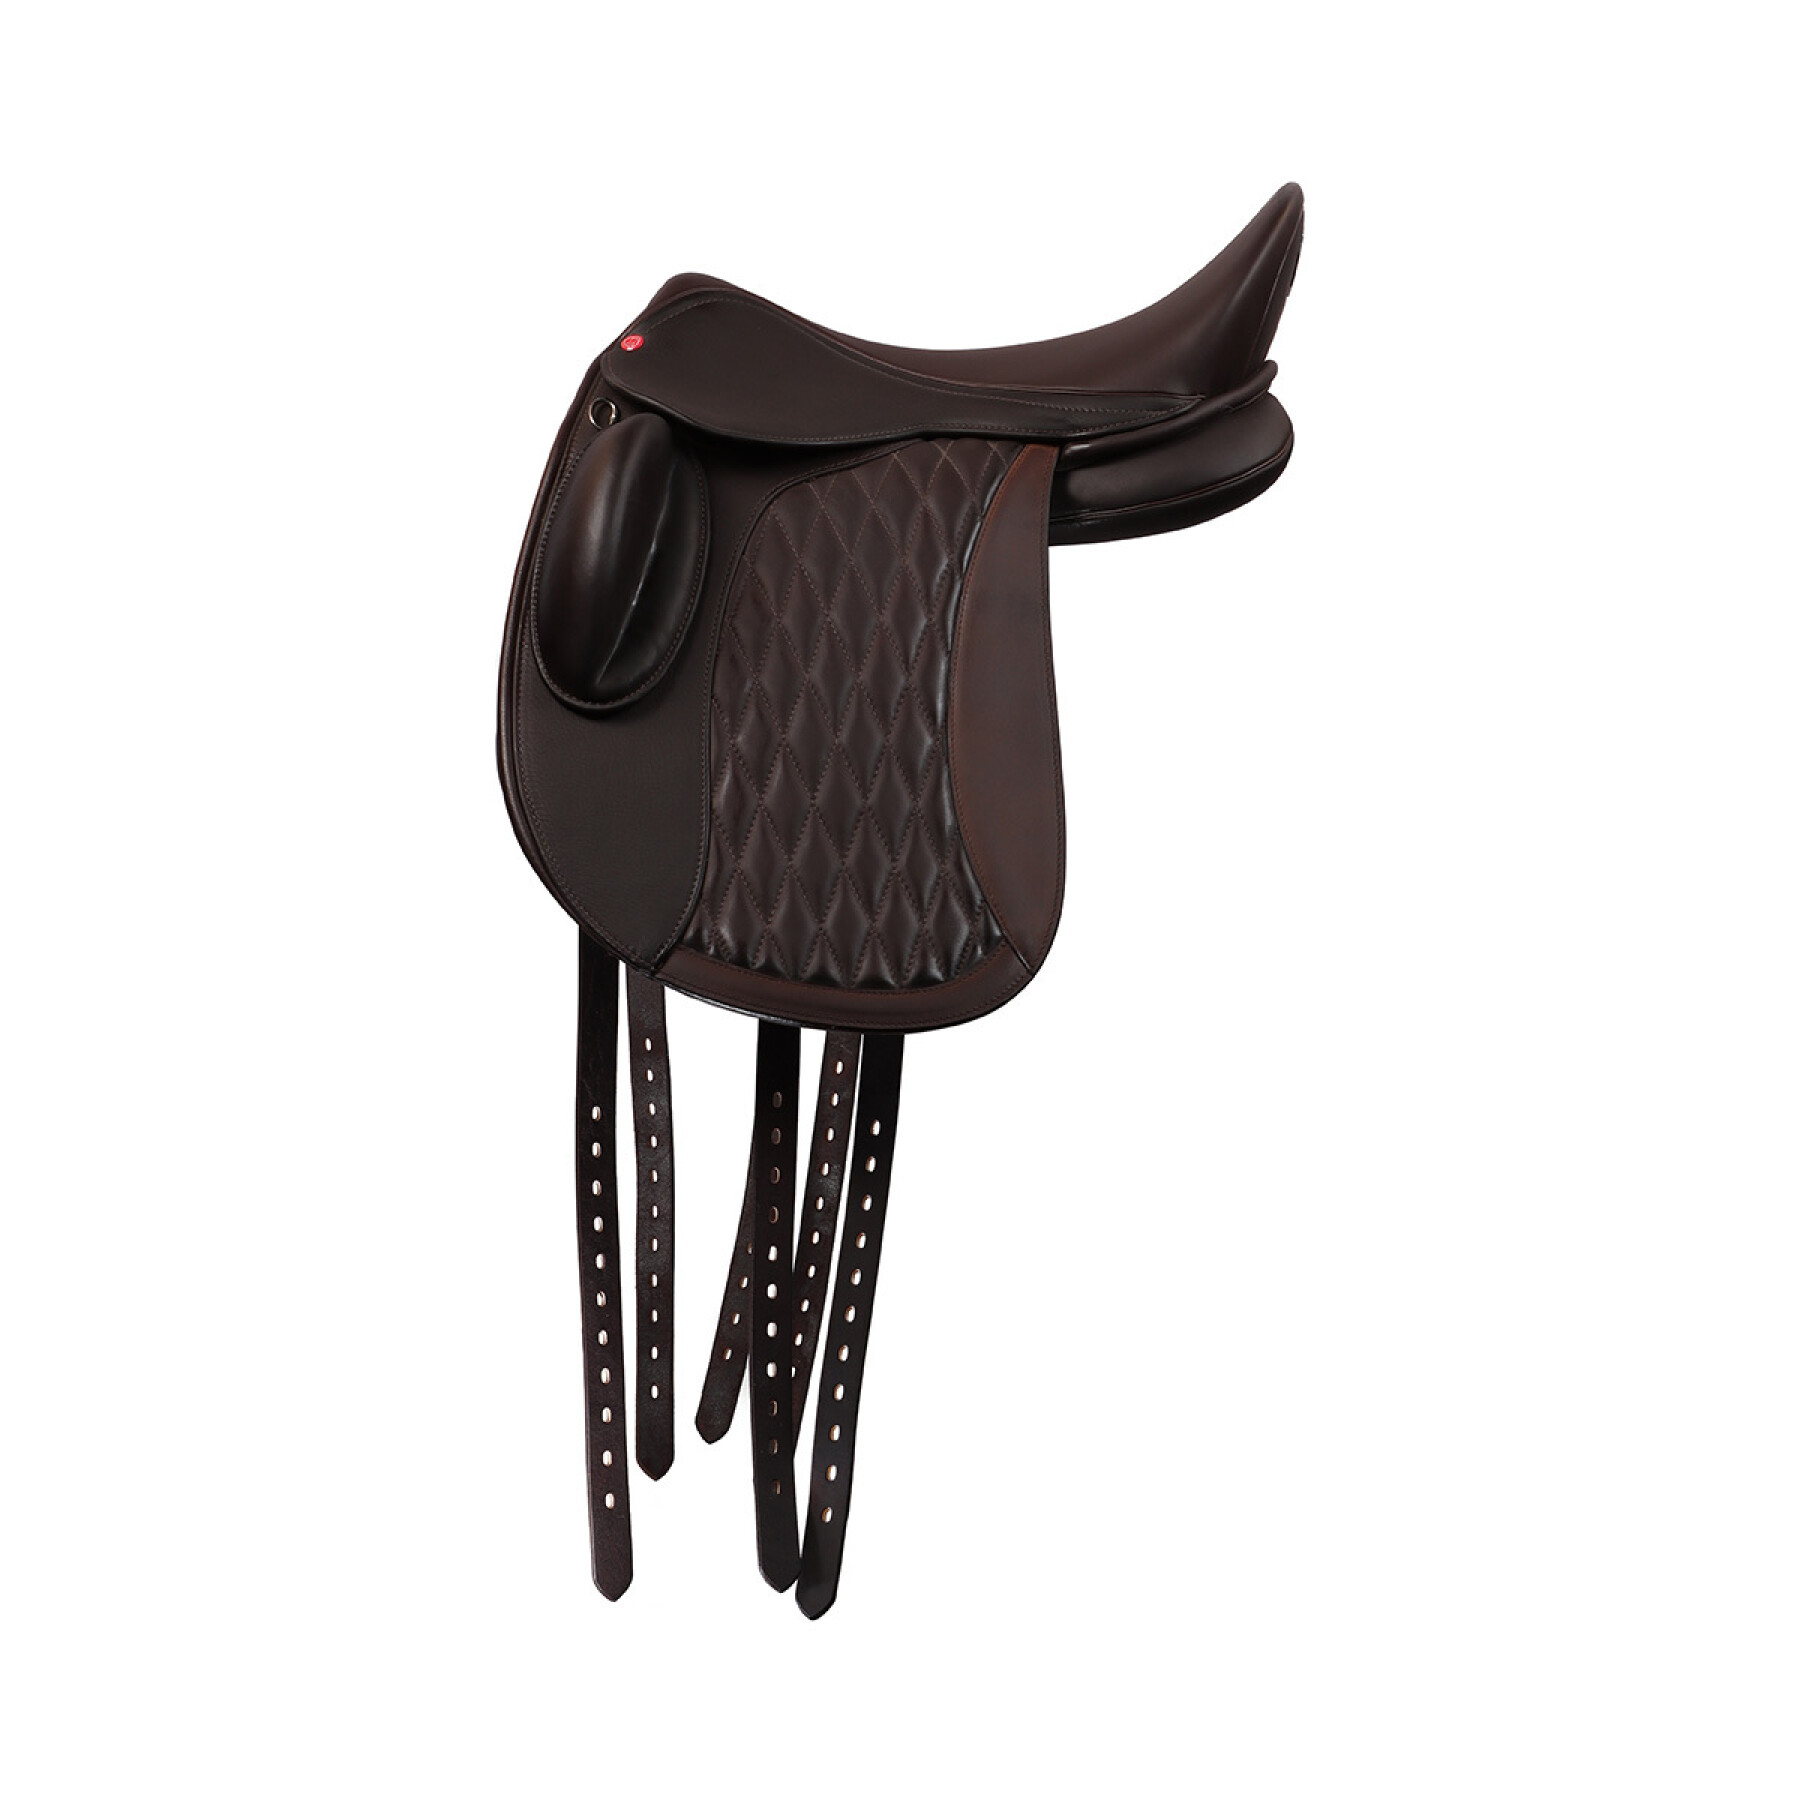 Dressage saddle for horses Edix Saddles Tariq